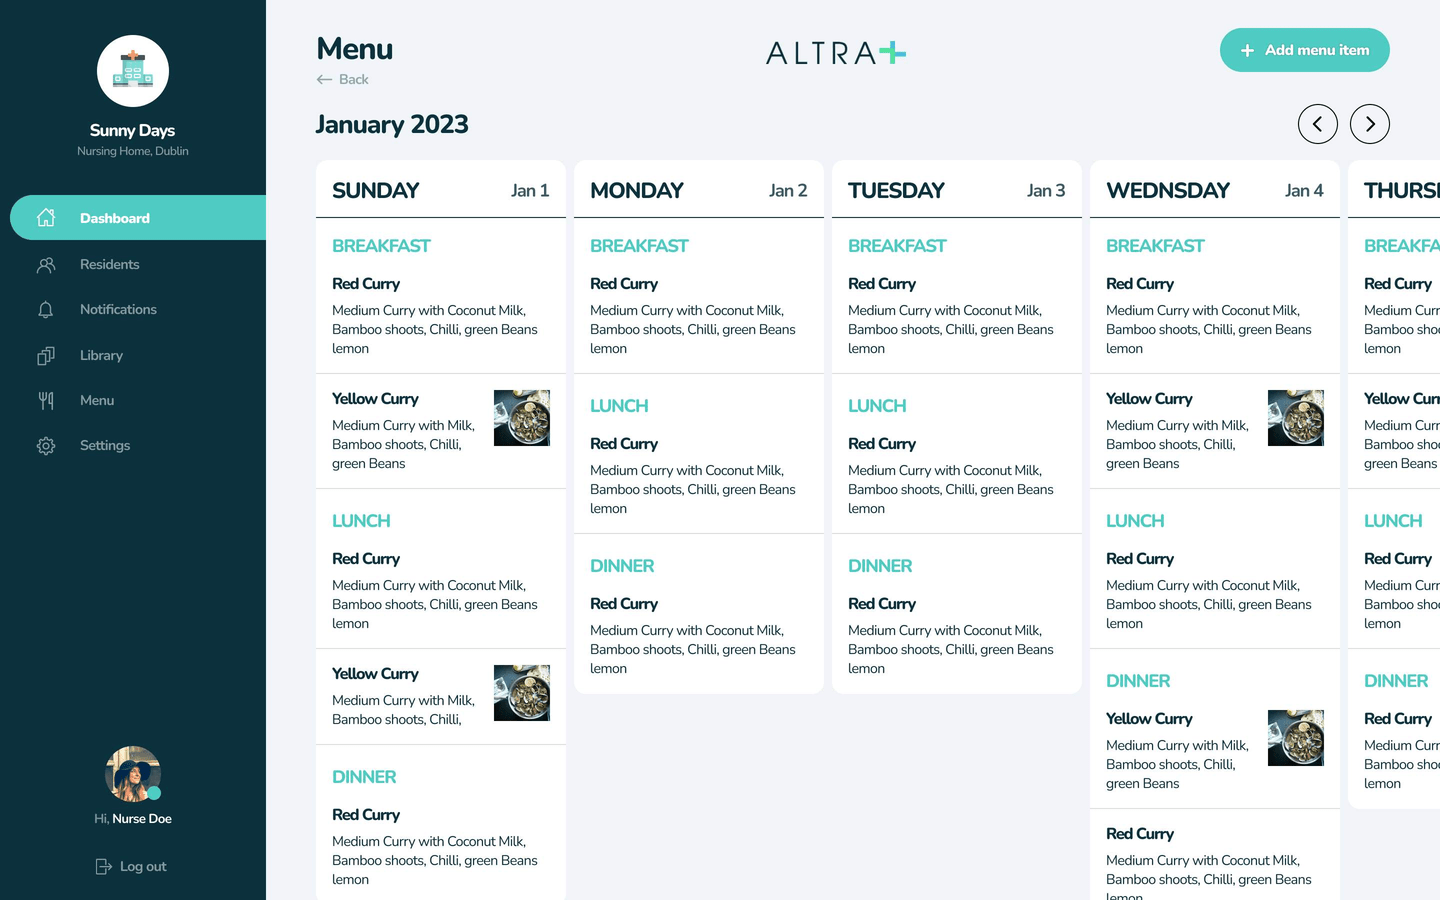 Manage and share menus